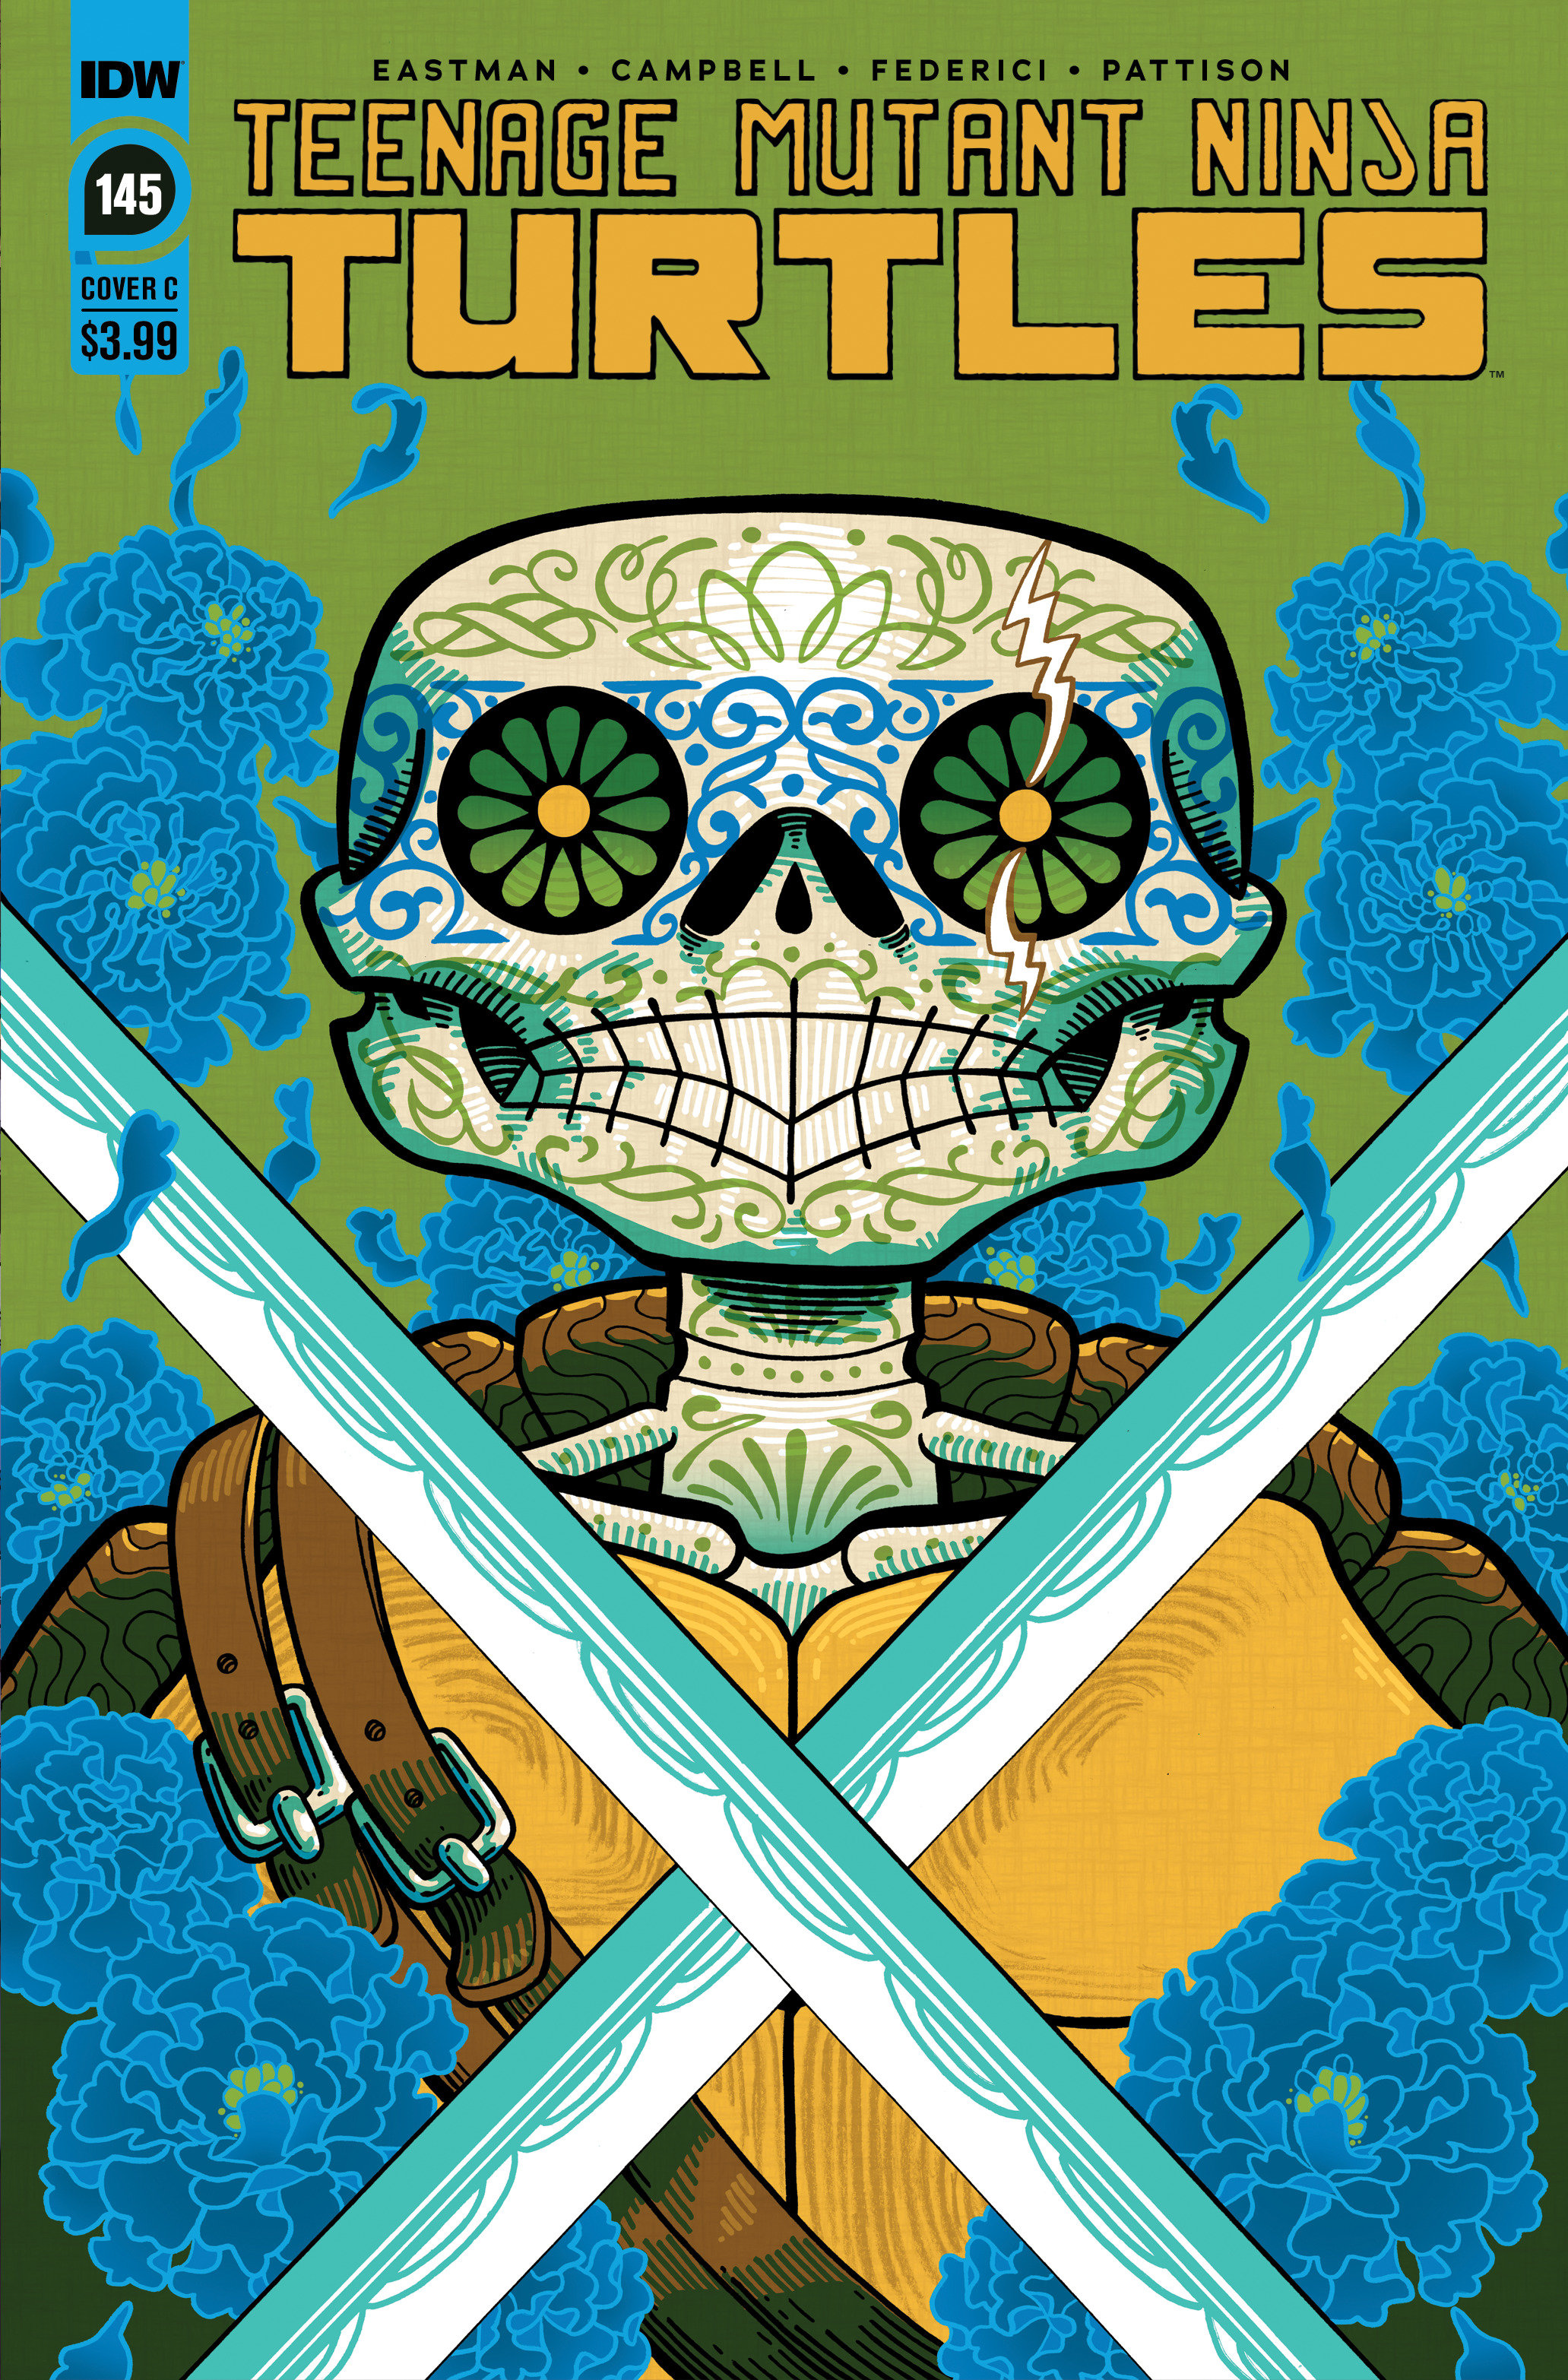 Teenage Mutant Ninja Turtles Ongoing #145 Cover C Día De Los Muertos